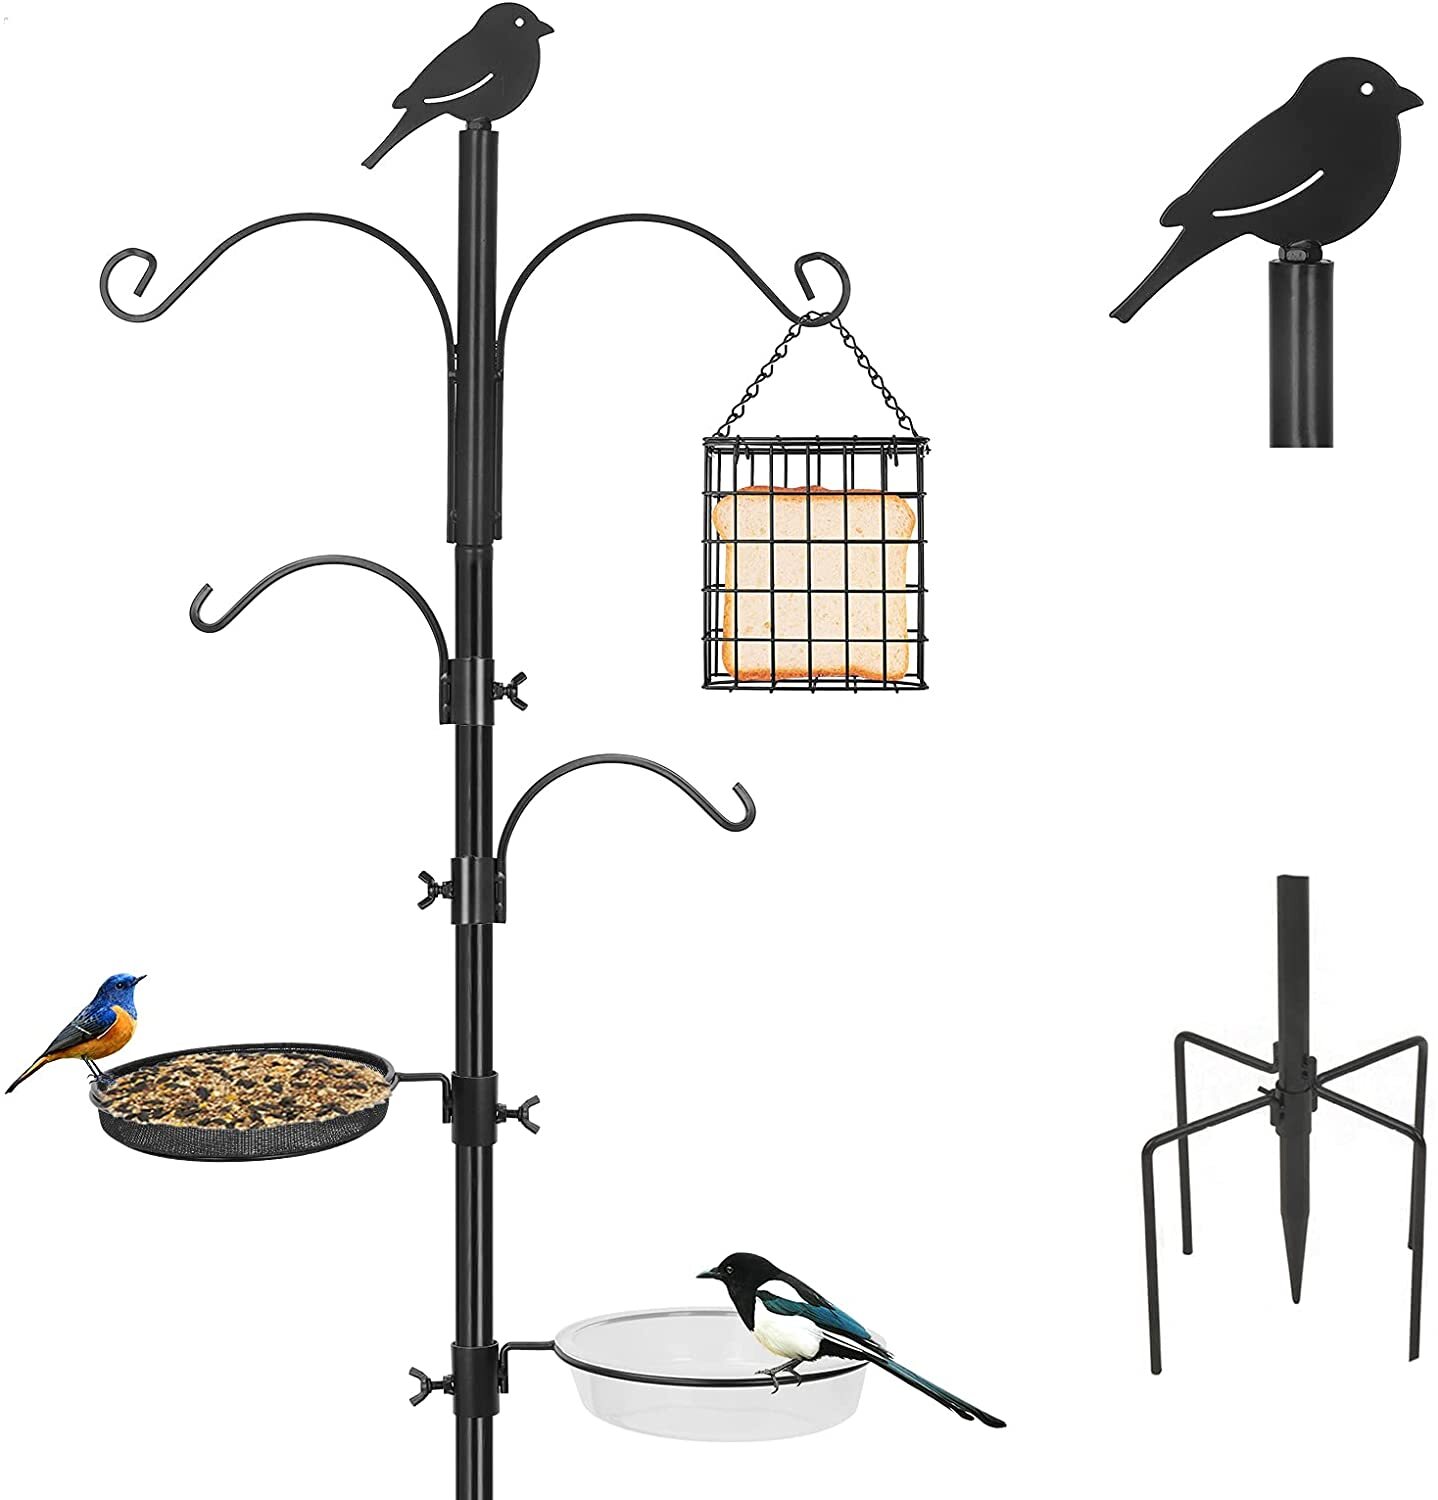 Bird feed stand with bird motif